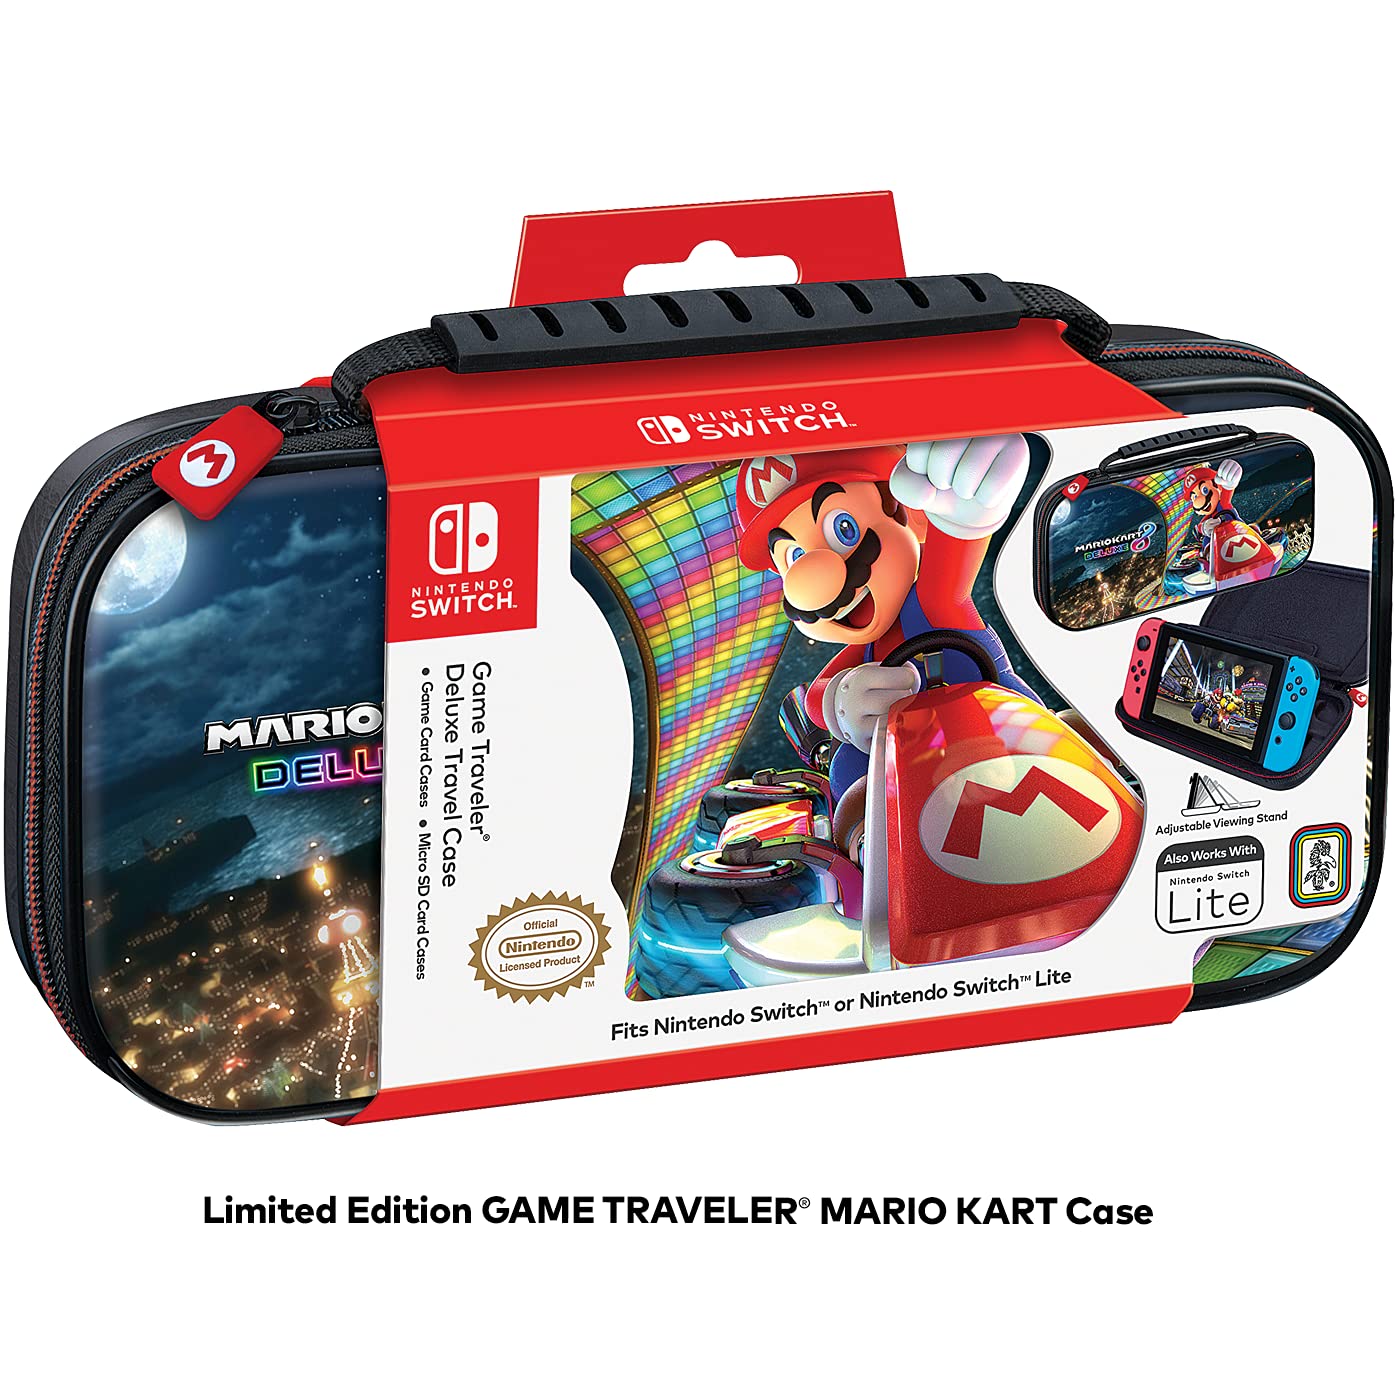 Nintendo Switch Mario Kart 8 Neon Deluxe Racing Bundle: Red Blue Joy Con Console, Mario Kart 8 Deluxe & Online Membership, Mario Kart 8 Travel Case, Red/Blue JoyCons, 4 Pcs Mytrix Wheels & Grips